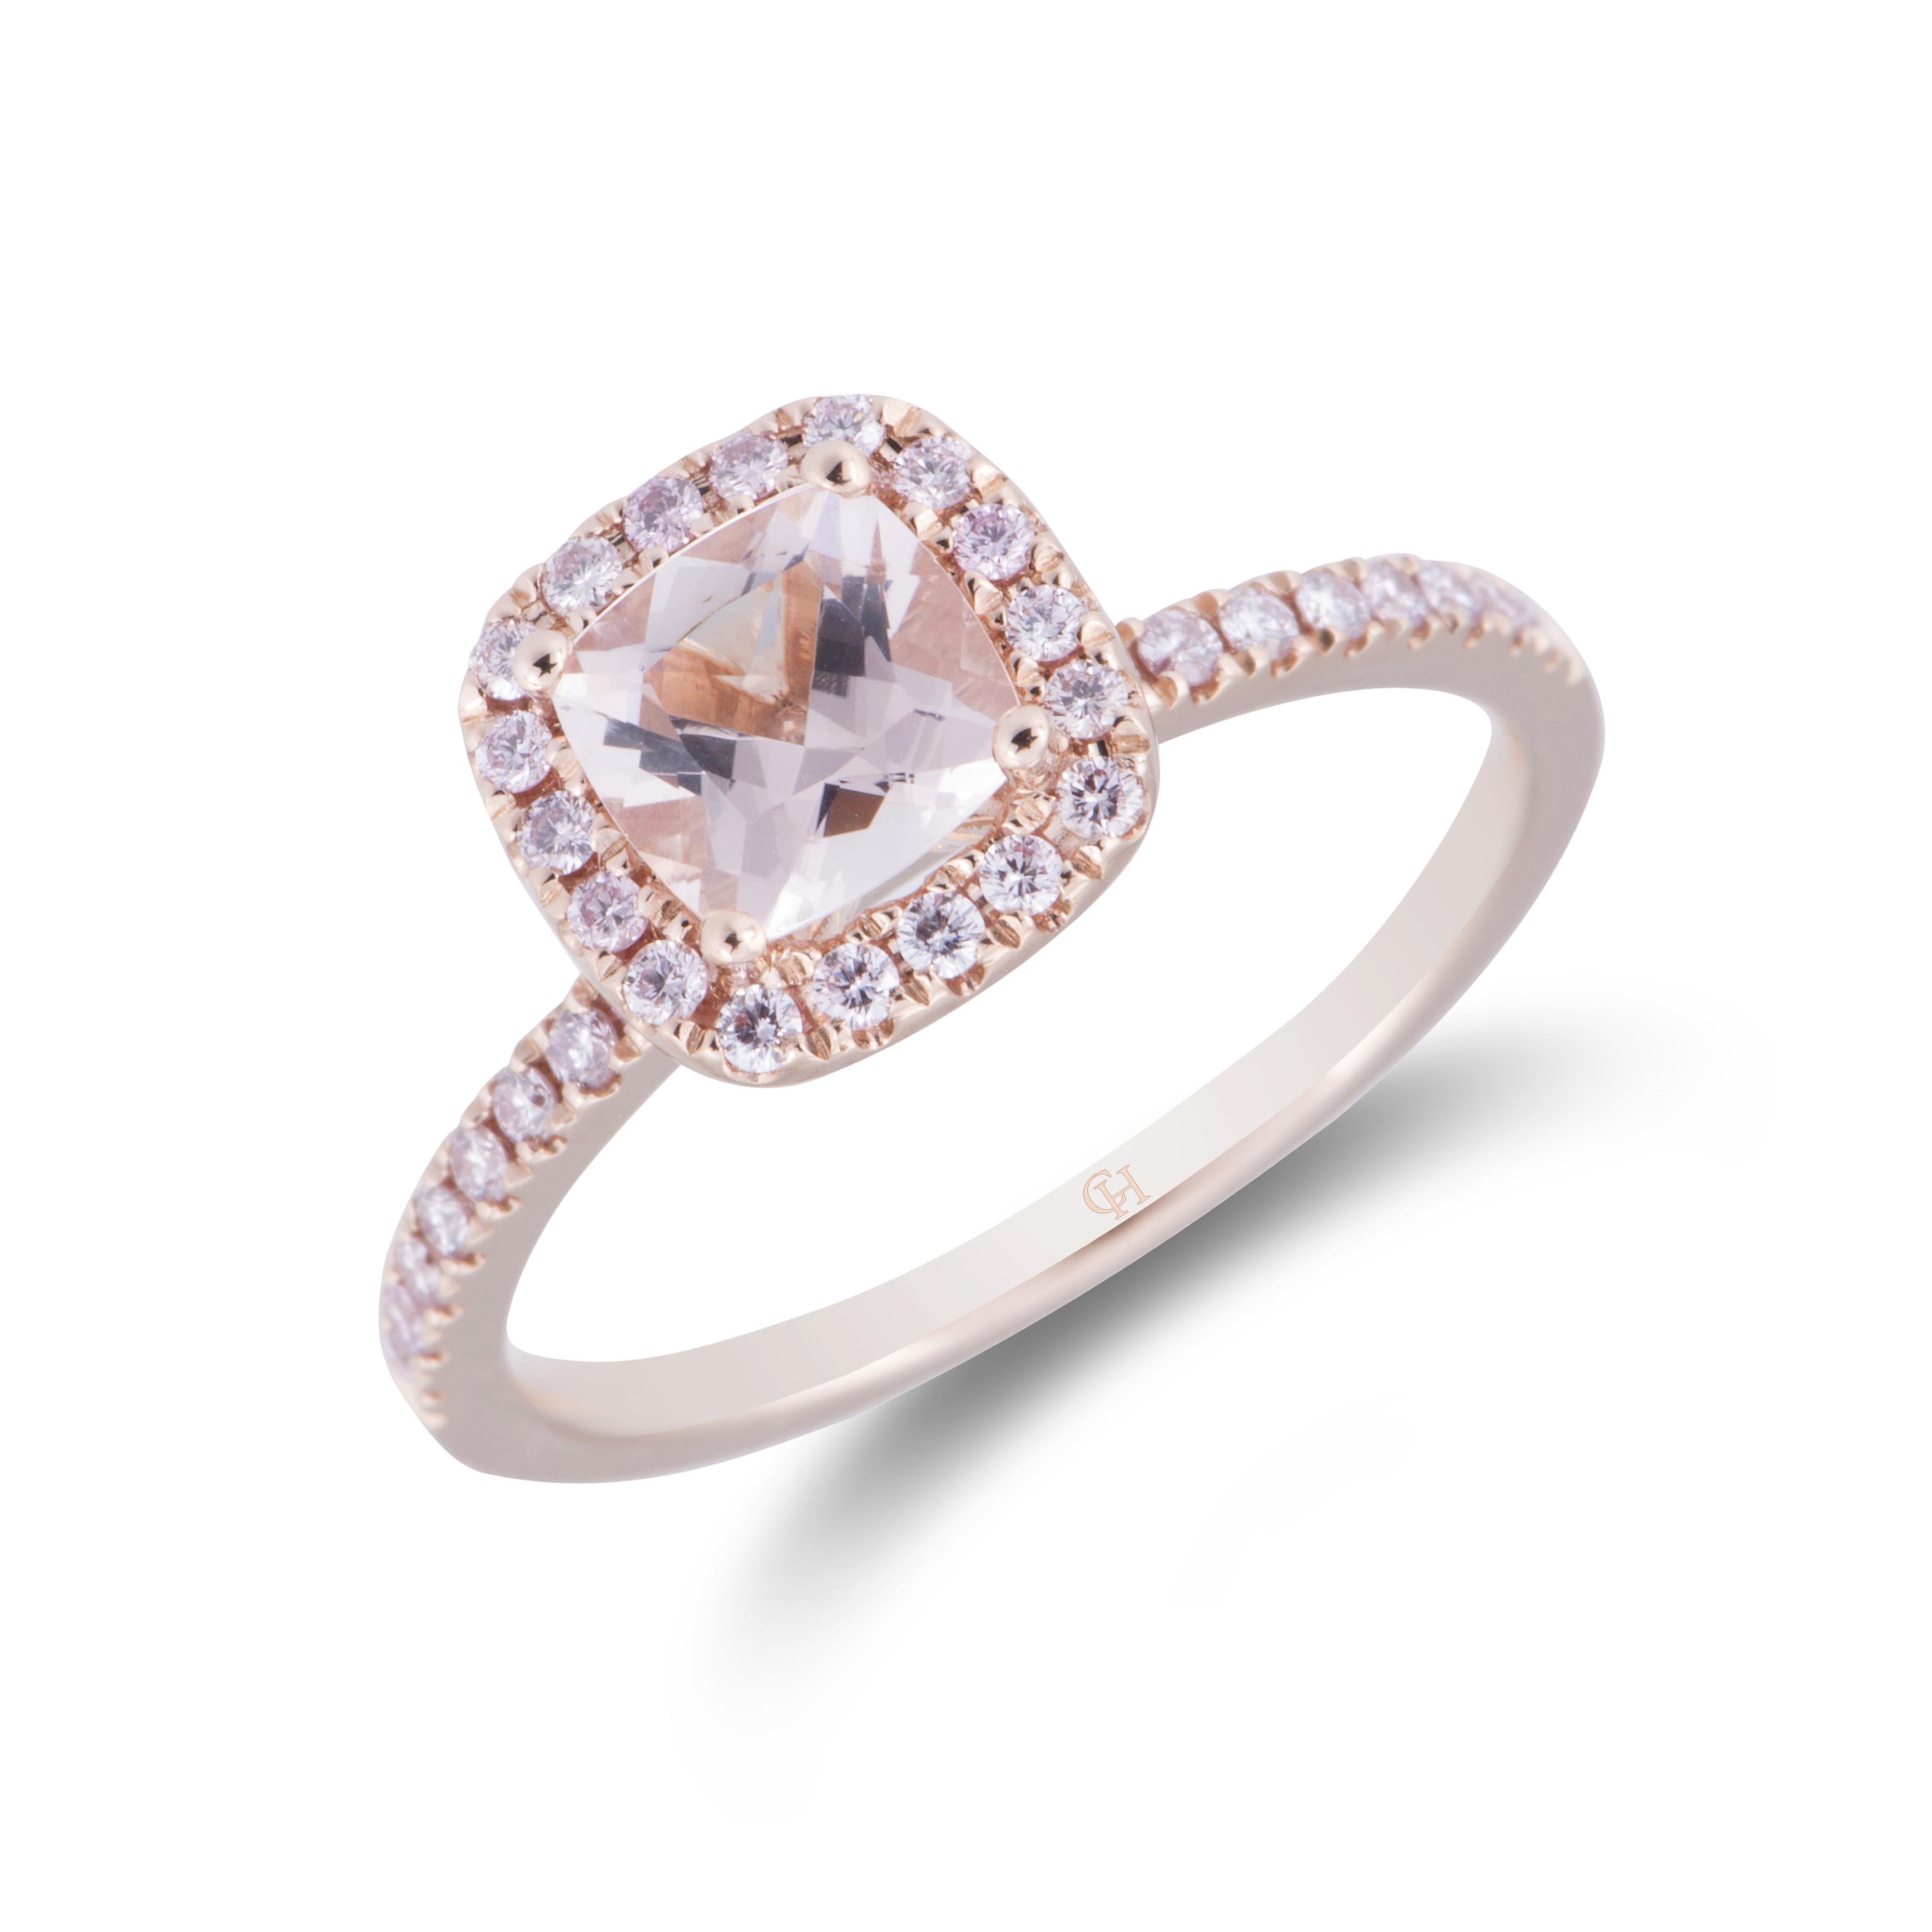 2Ct Cushion Cut Pink Morganite Simulant Diamond Halo Ring White Gold Fnsh Silver